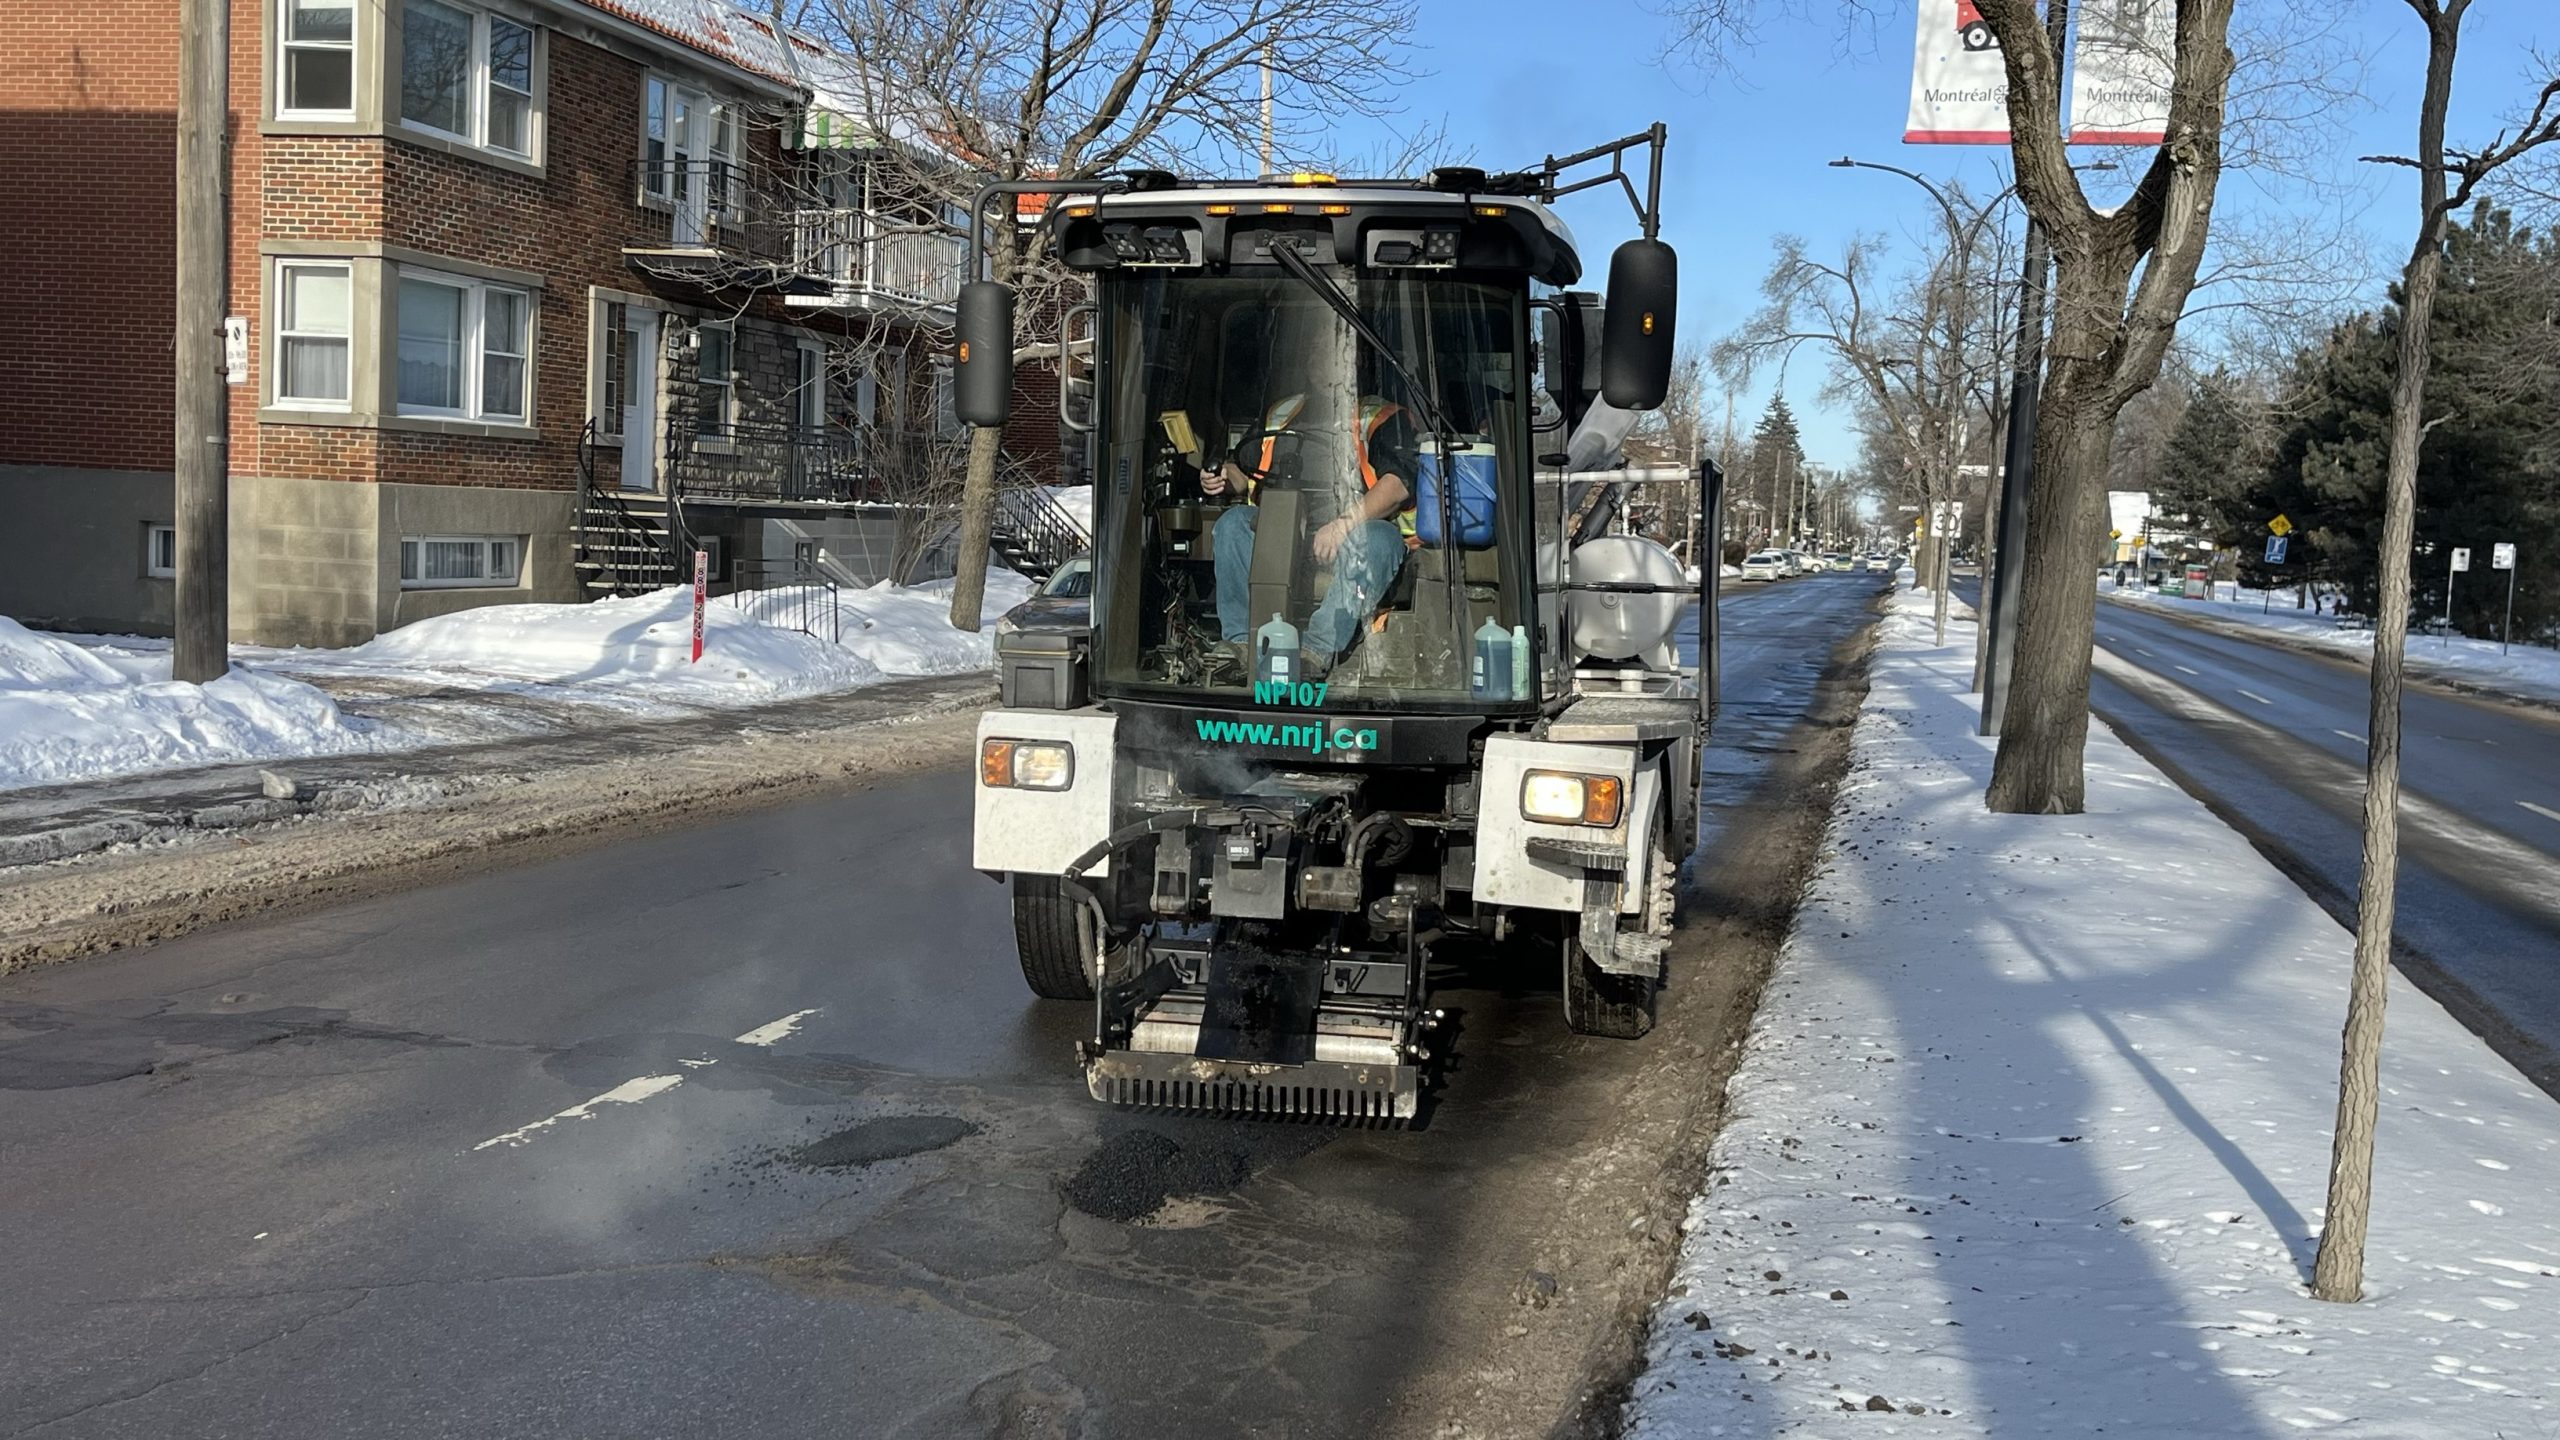 'Chasing potholes': City of Montreal on emergency pothole repair blitz | CityNews Montreal